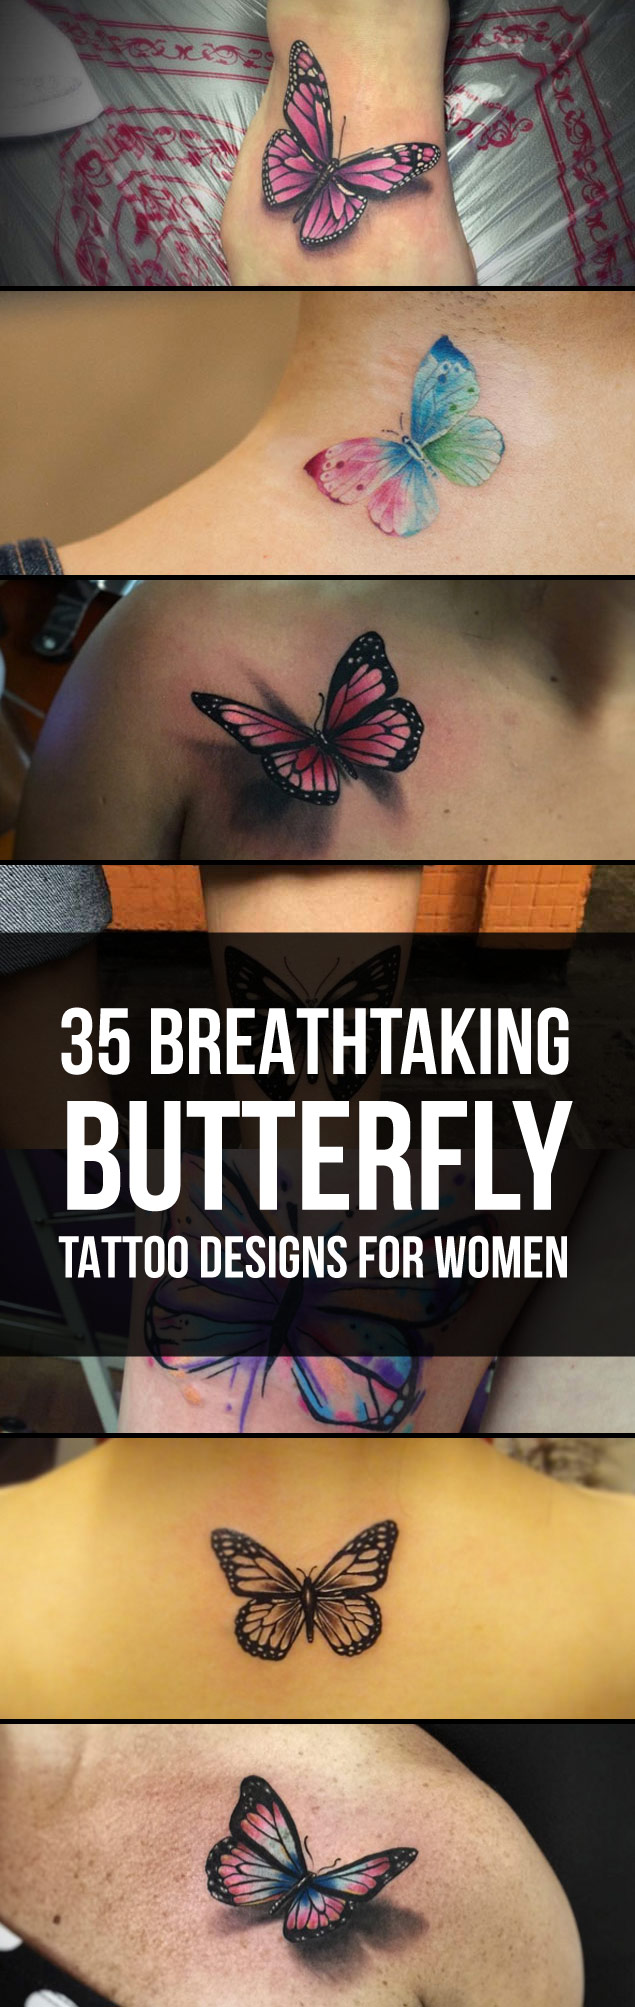 Breathtaking Butterfly Tattoo Designs | TattooBlend